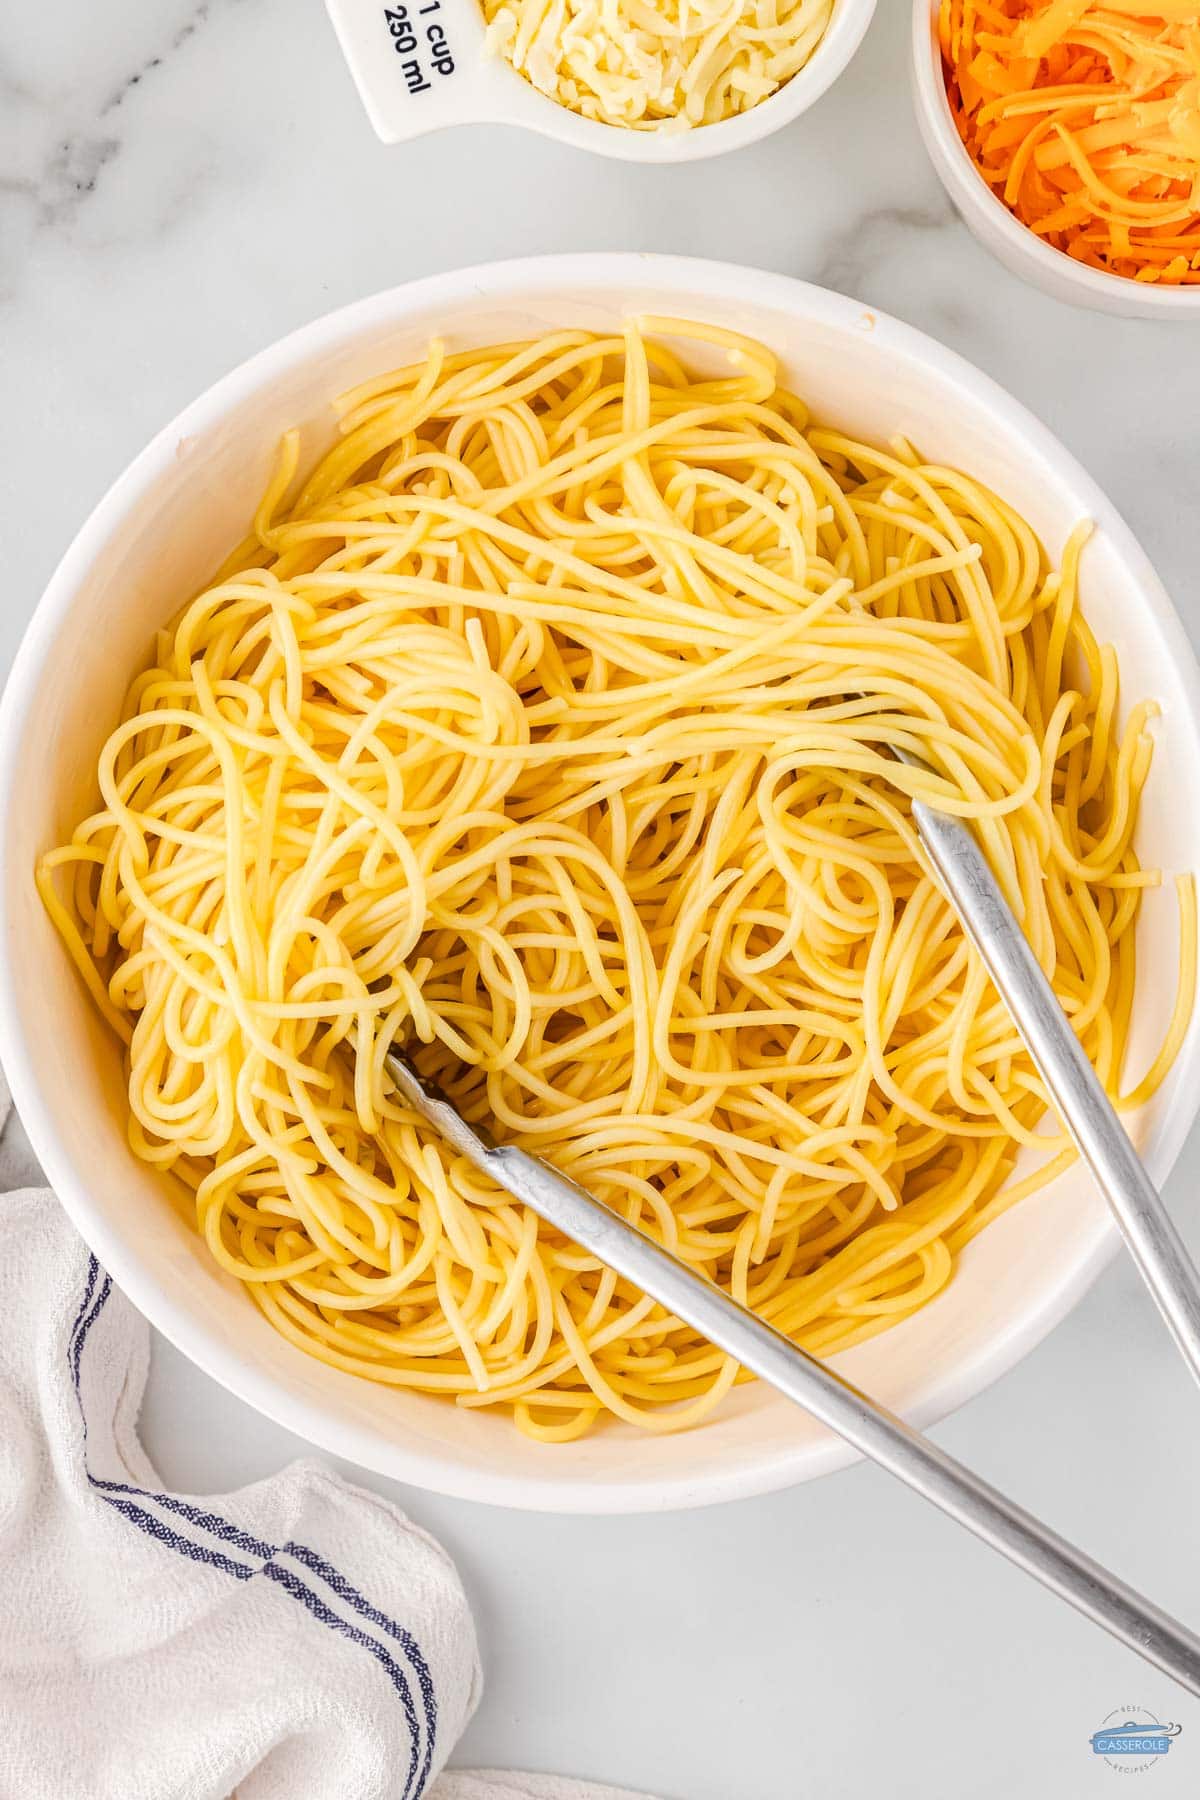 cook the noodles in this pasta recipe al dente